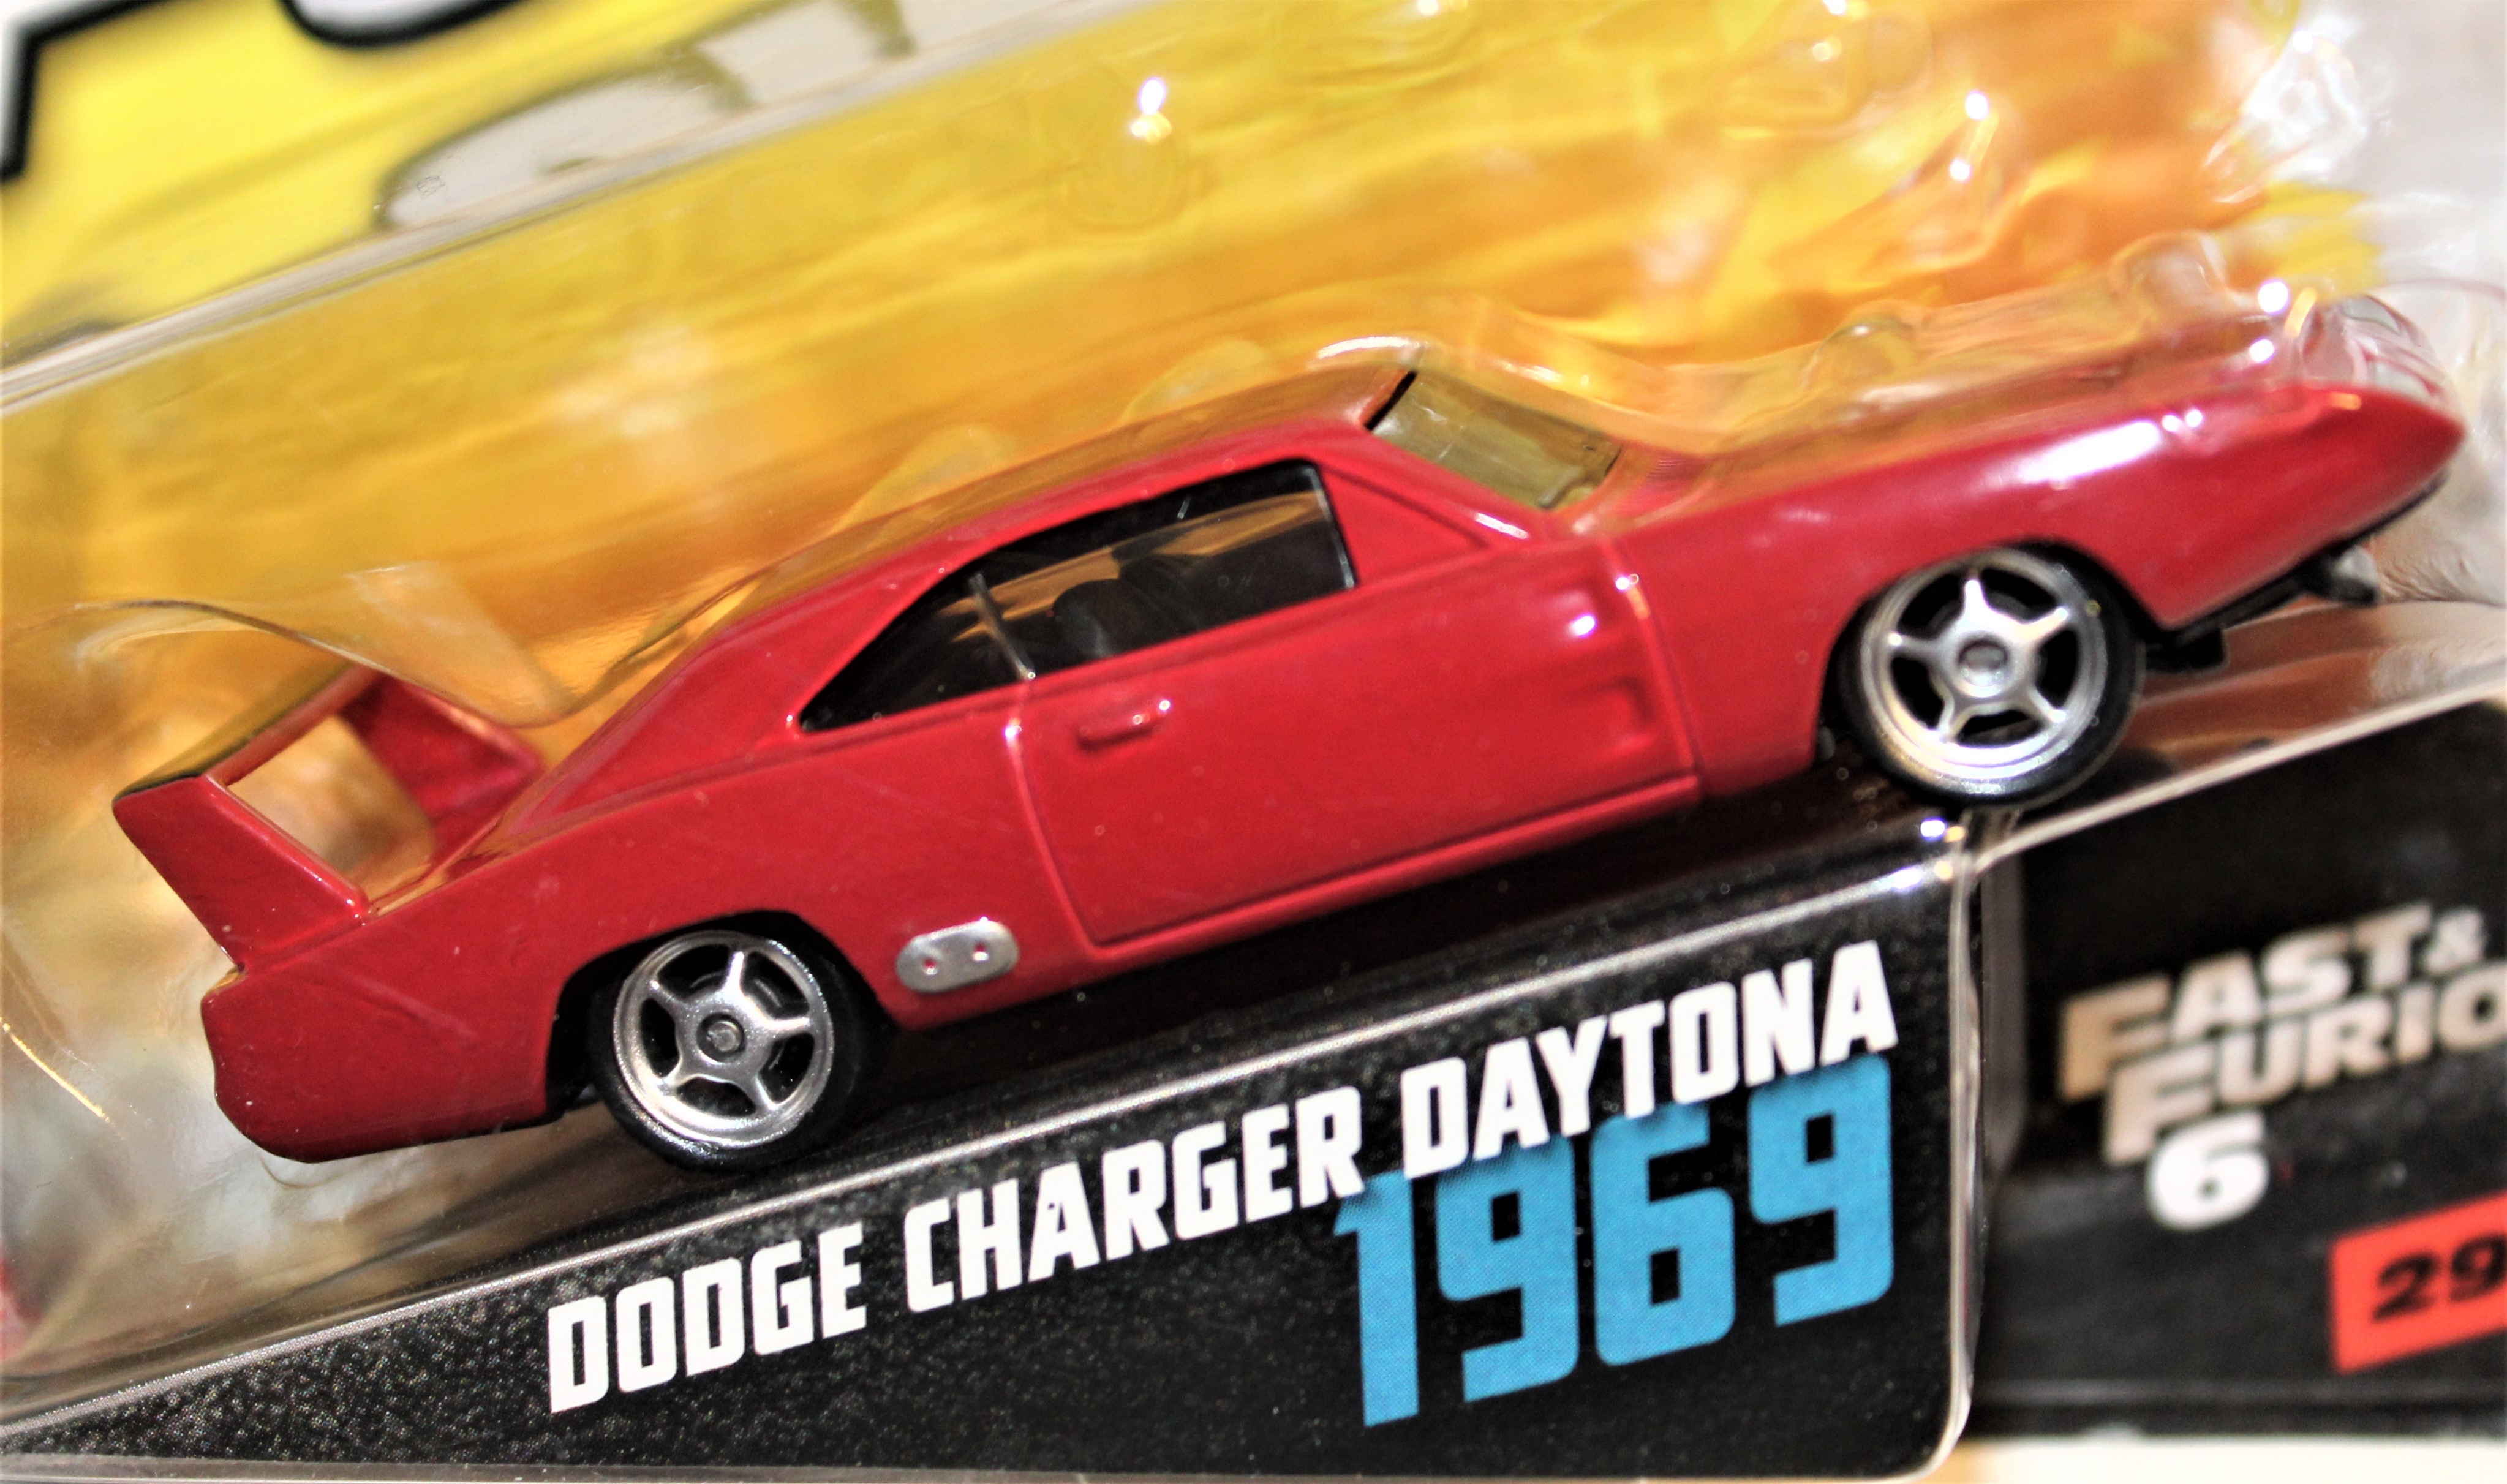 Fast & Furious  Modell-Fahrzeug  1969 Dodge Charger Daytona   FCN86 NEU & OVP 